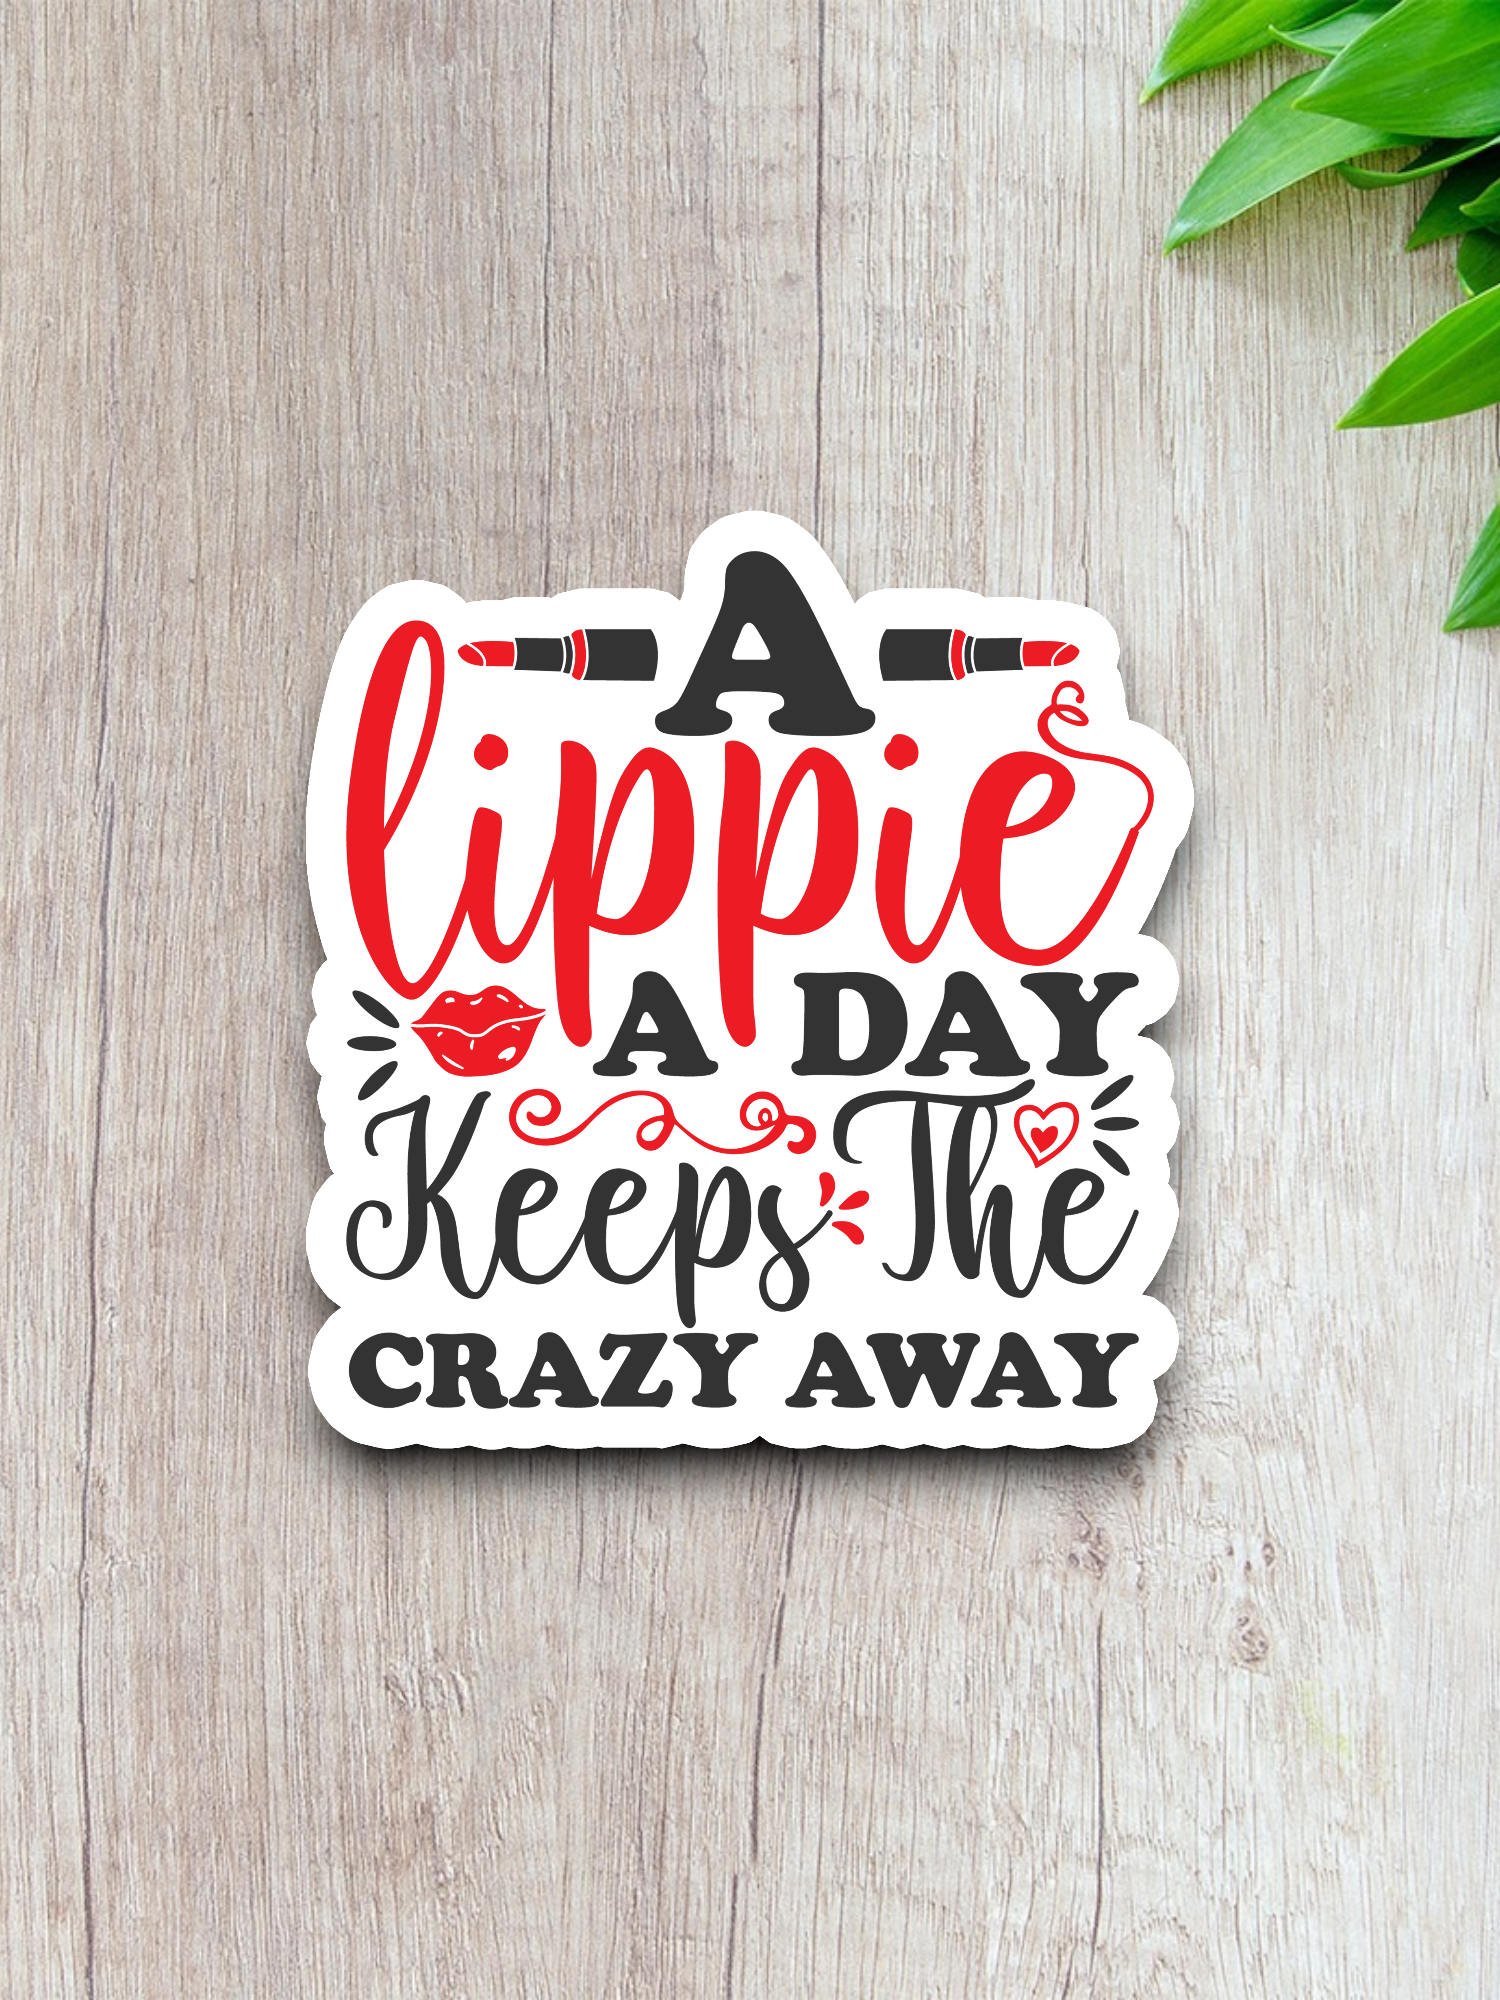 A Lippie a Day Keeps the Crazy Away Sticker